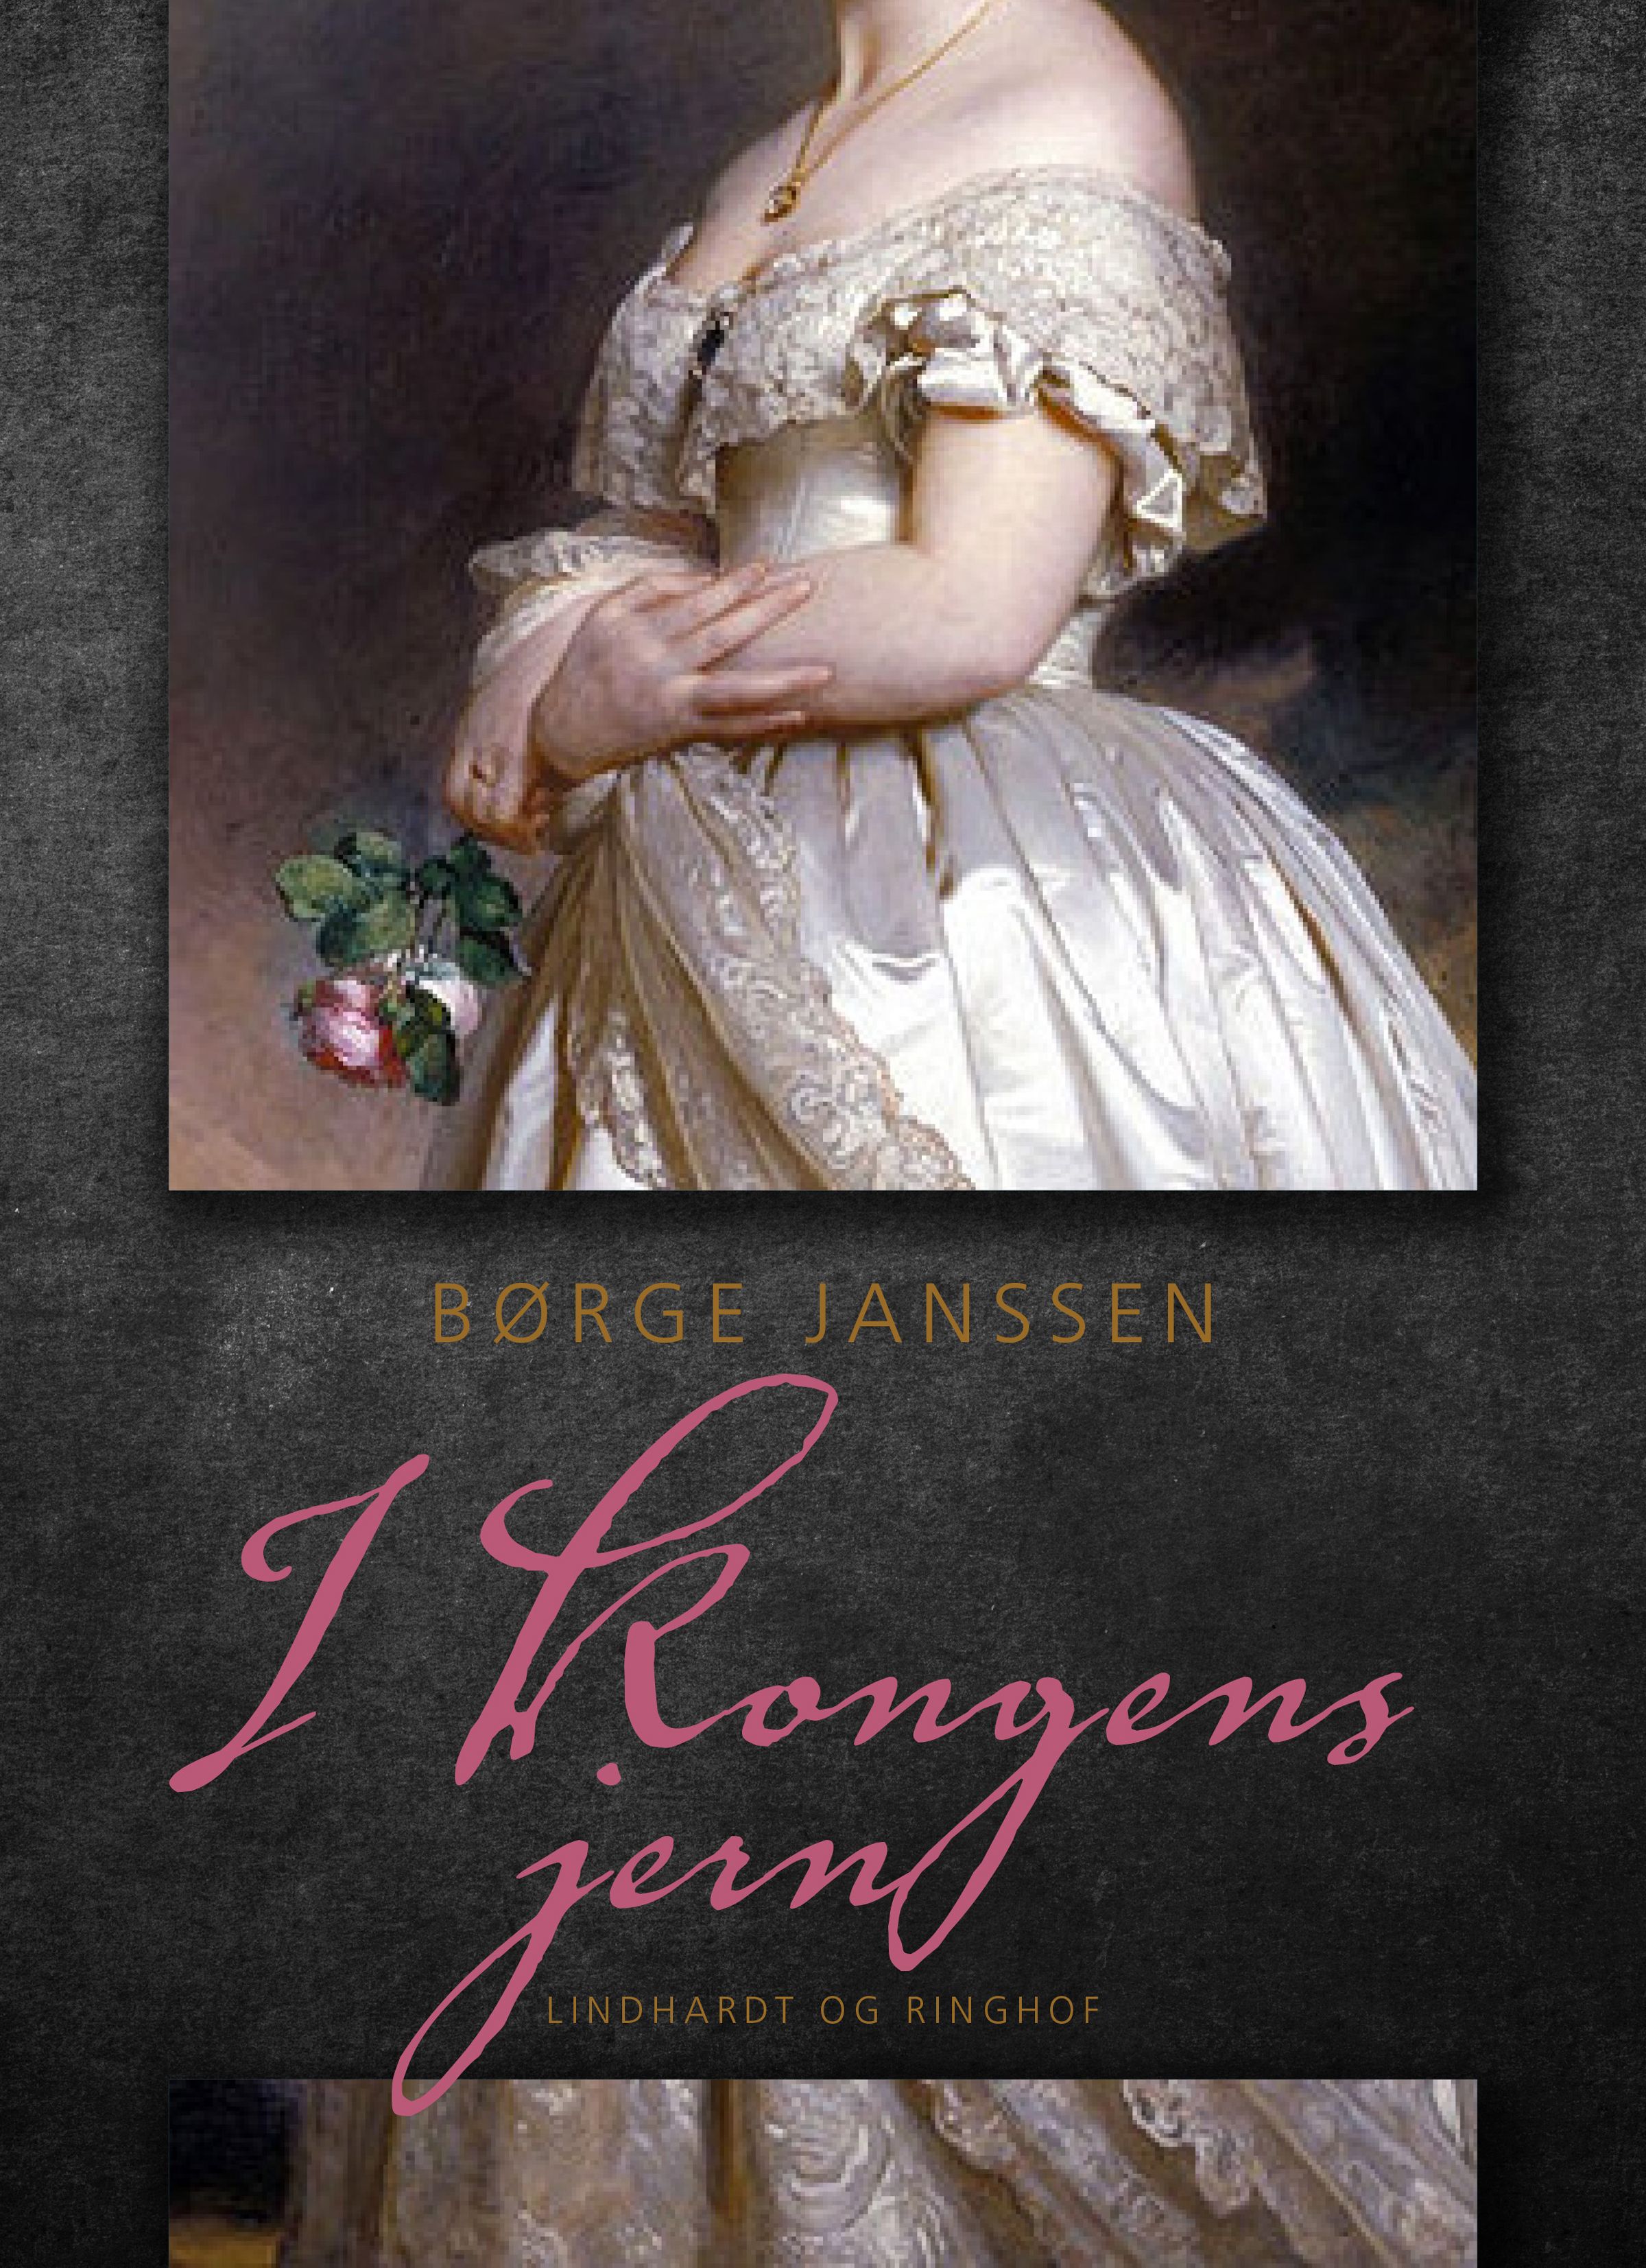 I Kongens jærn, eBook by Børge Janssen